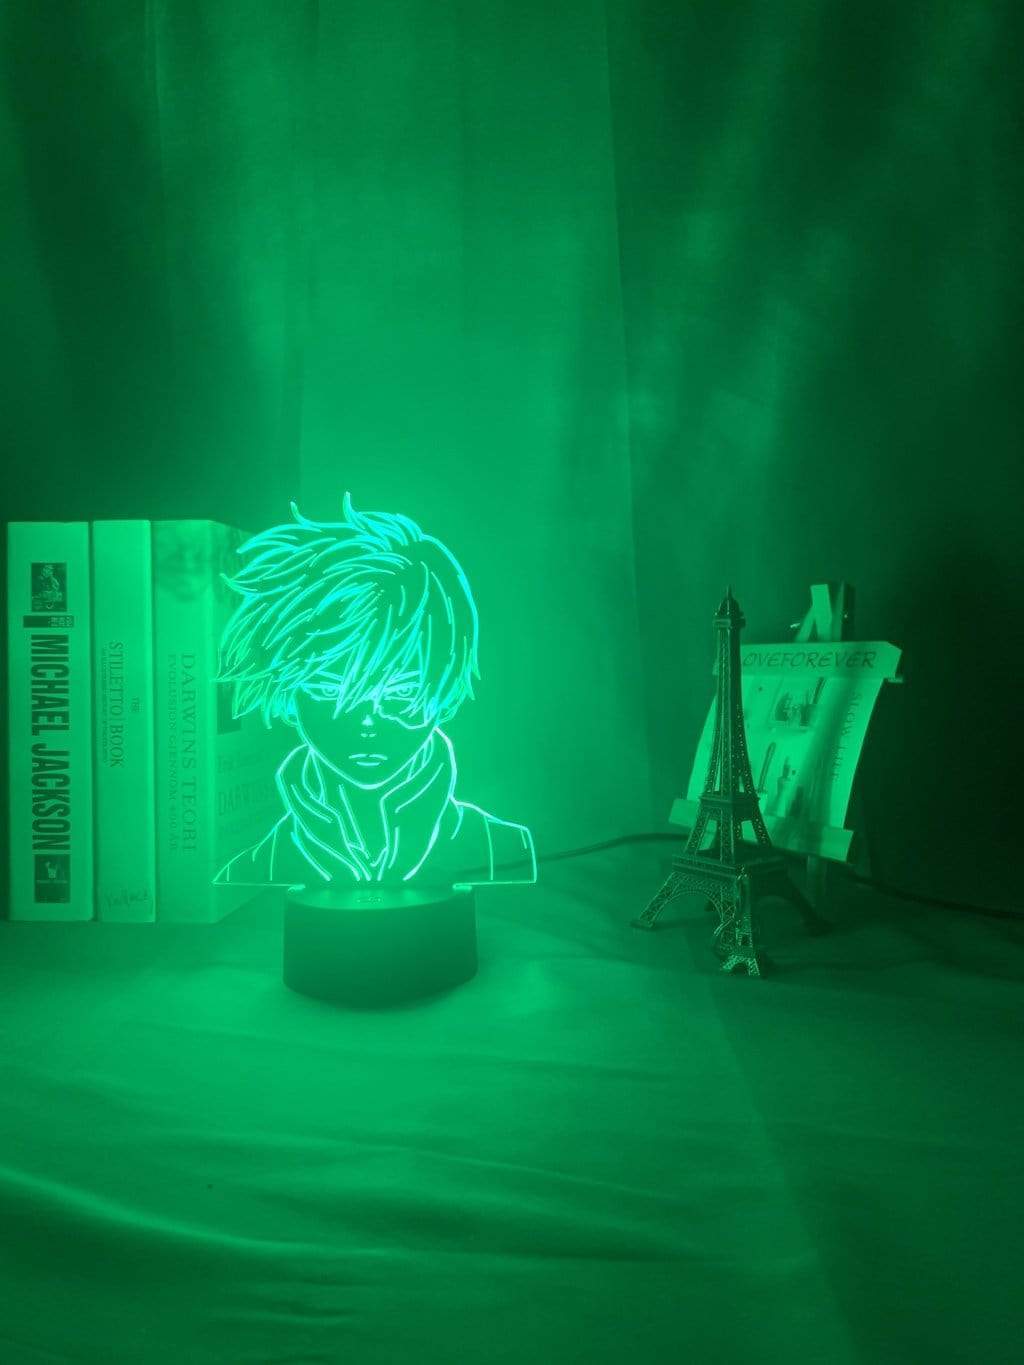 Lampe My Hero Academia Shoto Todoroki Face Design Led Night Light lampe led 3D